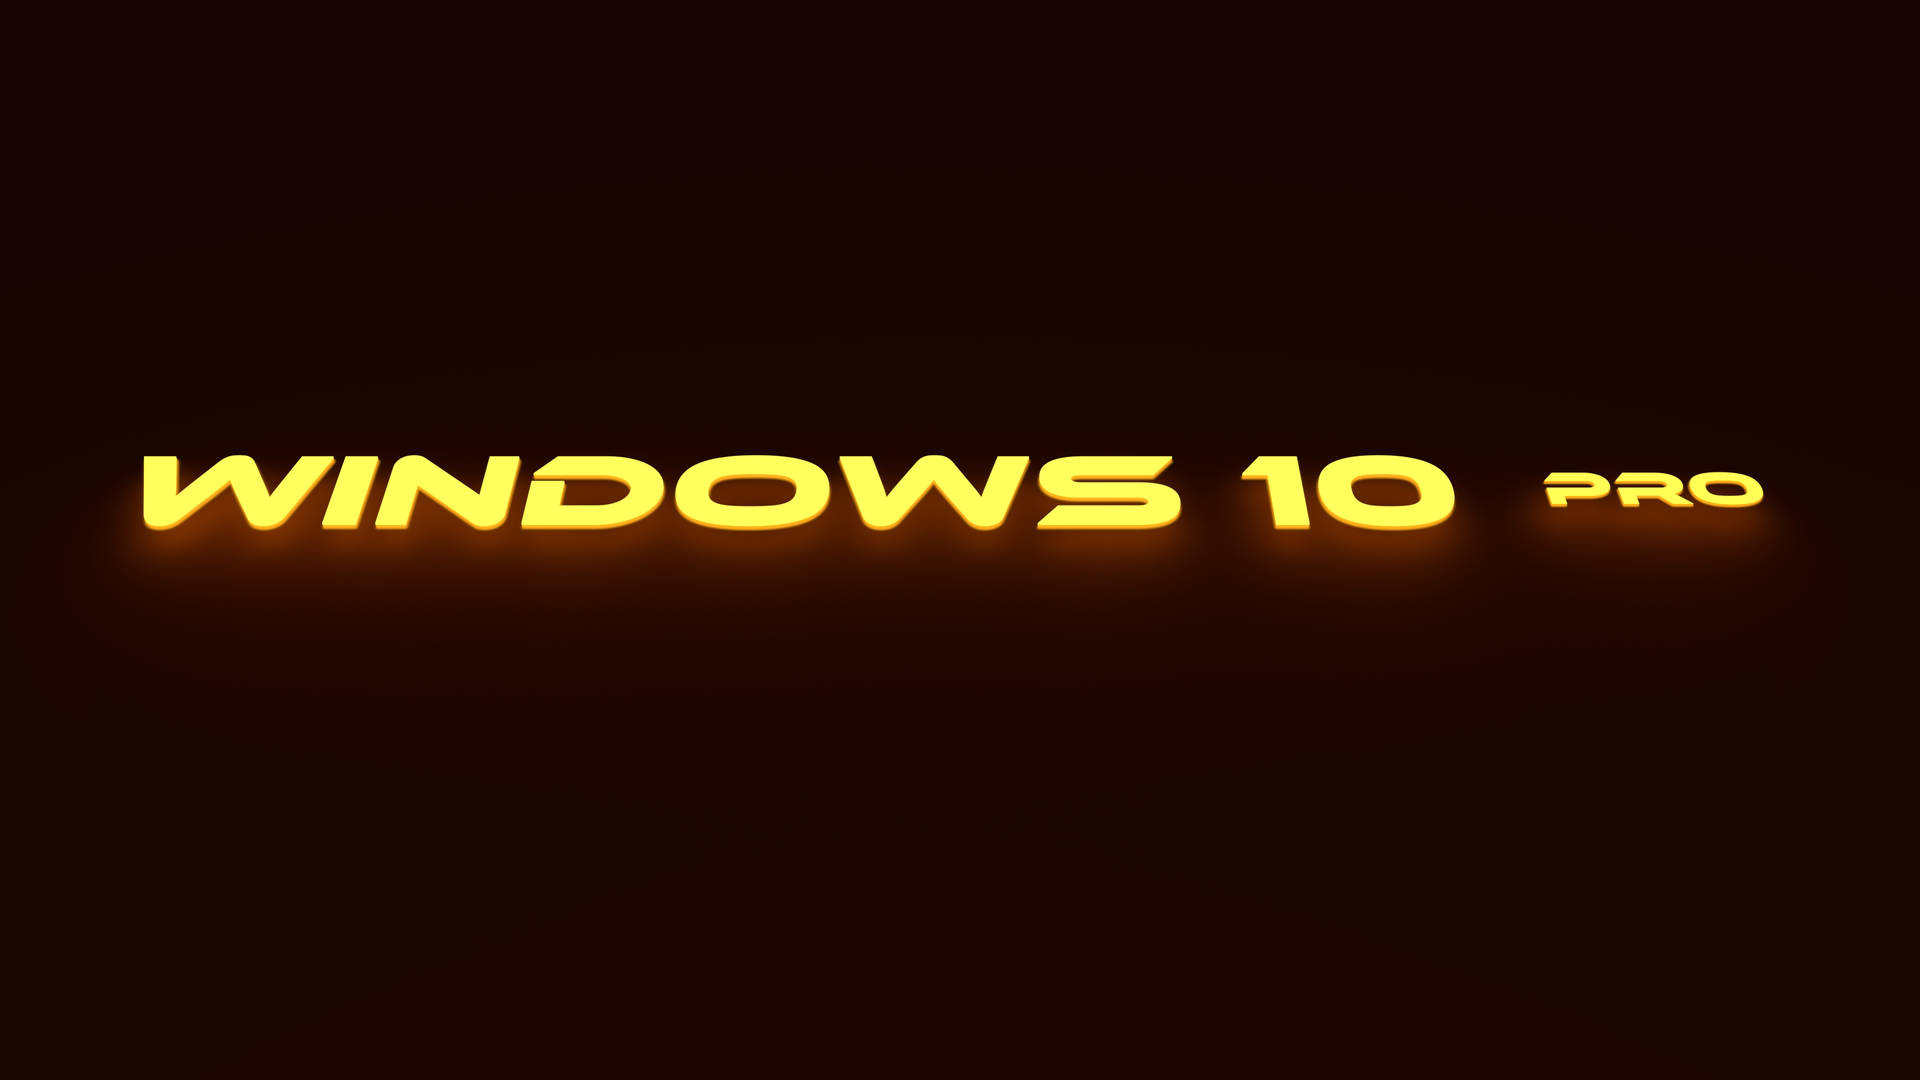 Windows 10 Hd Pro Wallpaper